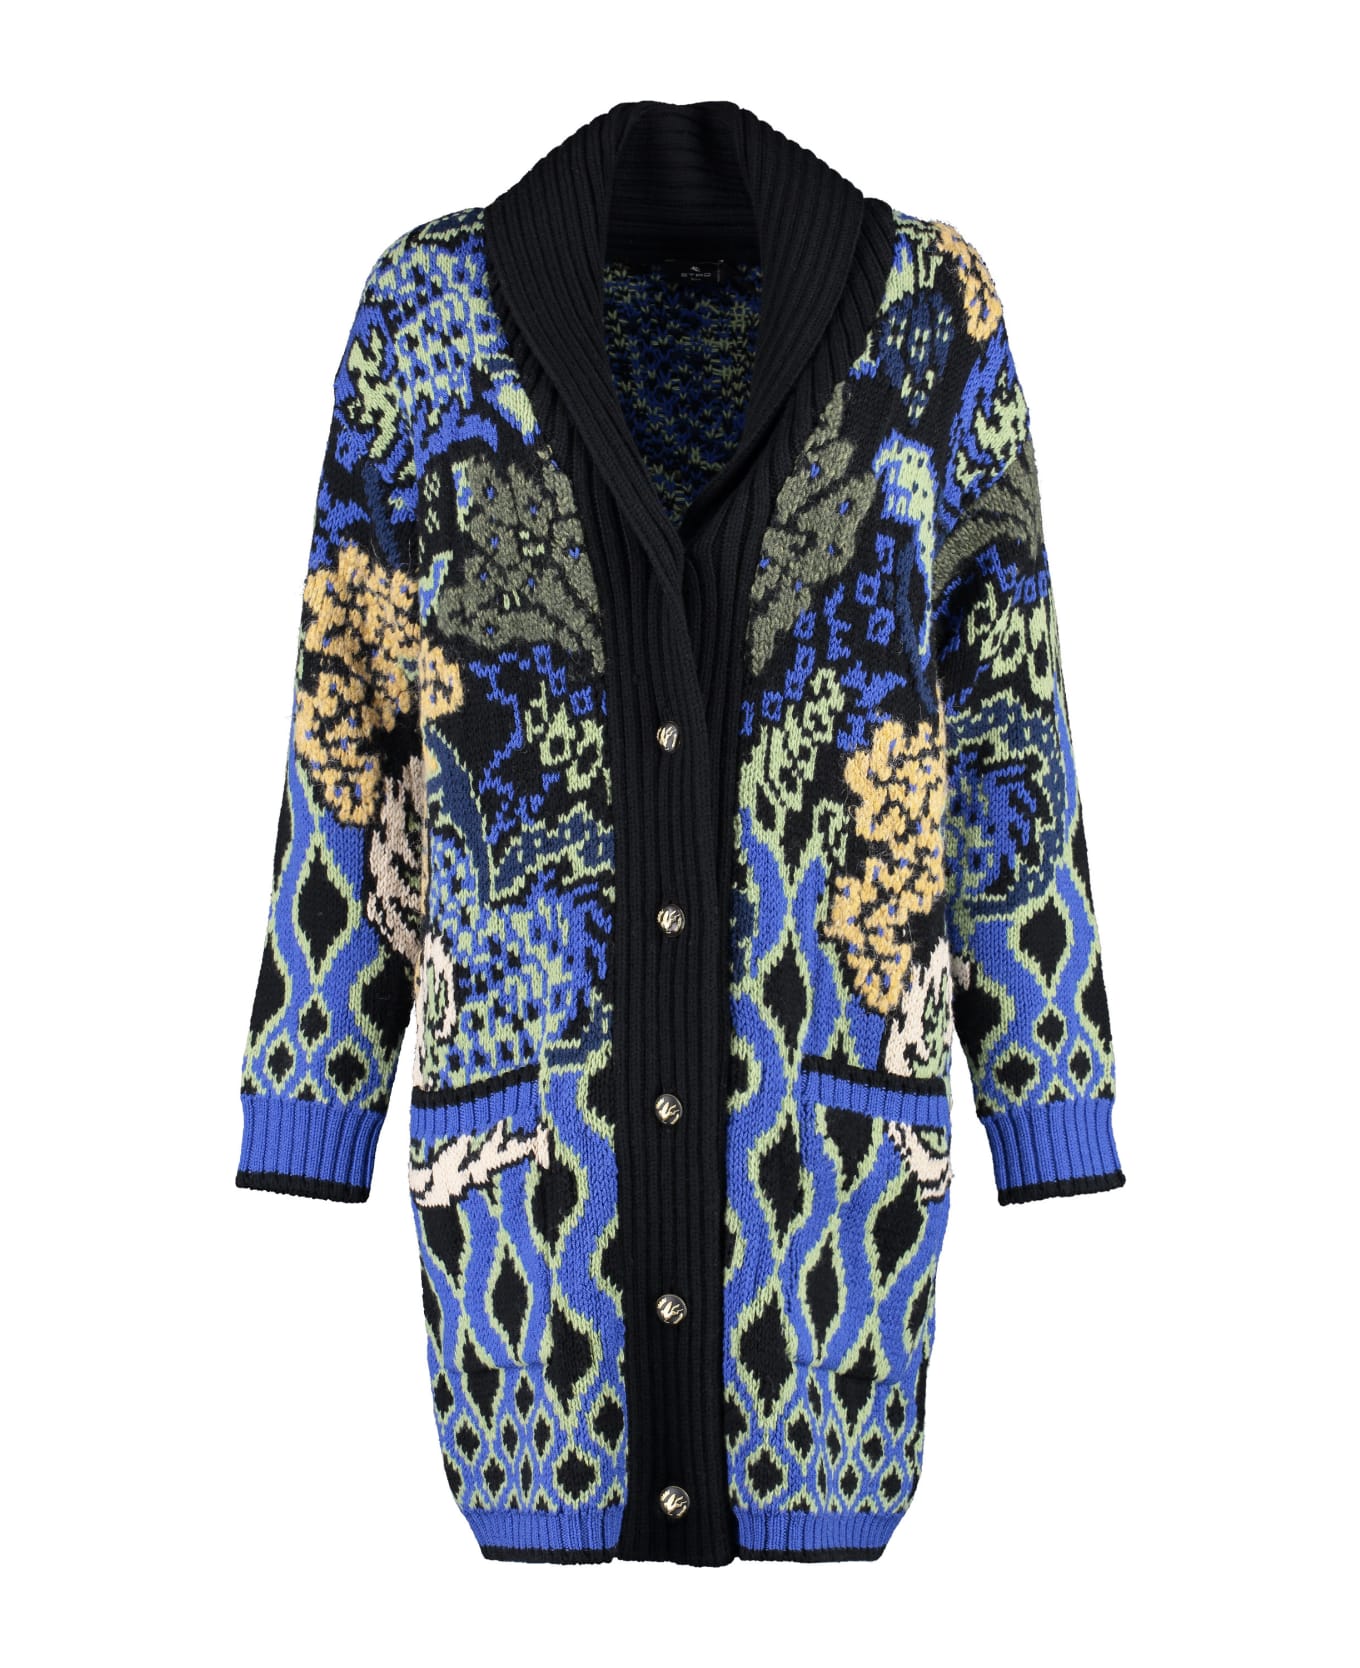 Etro Jacquard Knit Coat - Multicolor